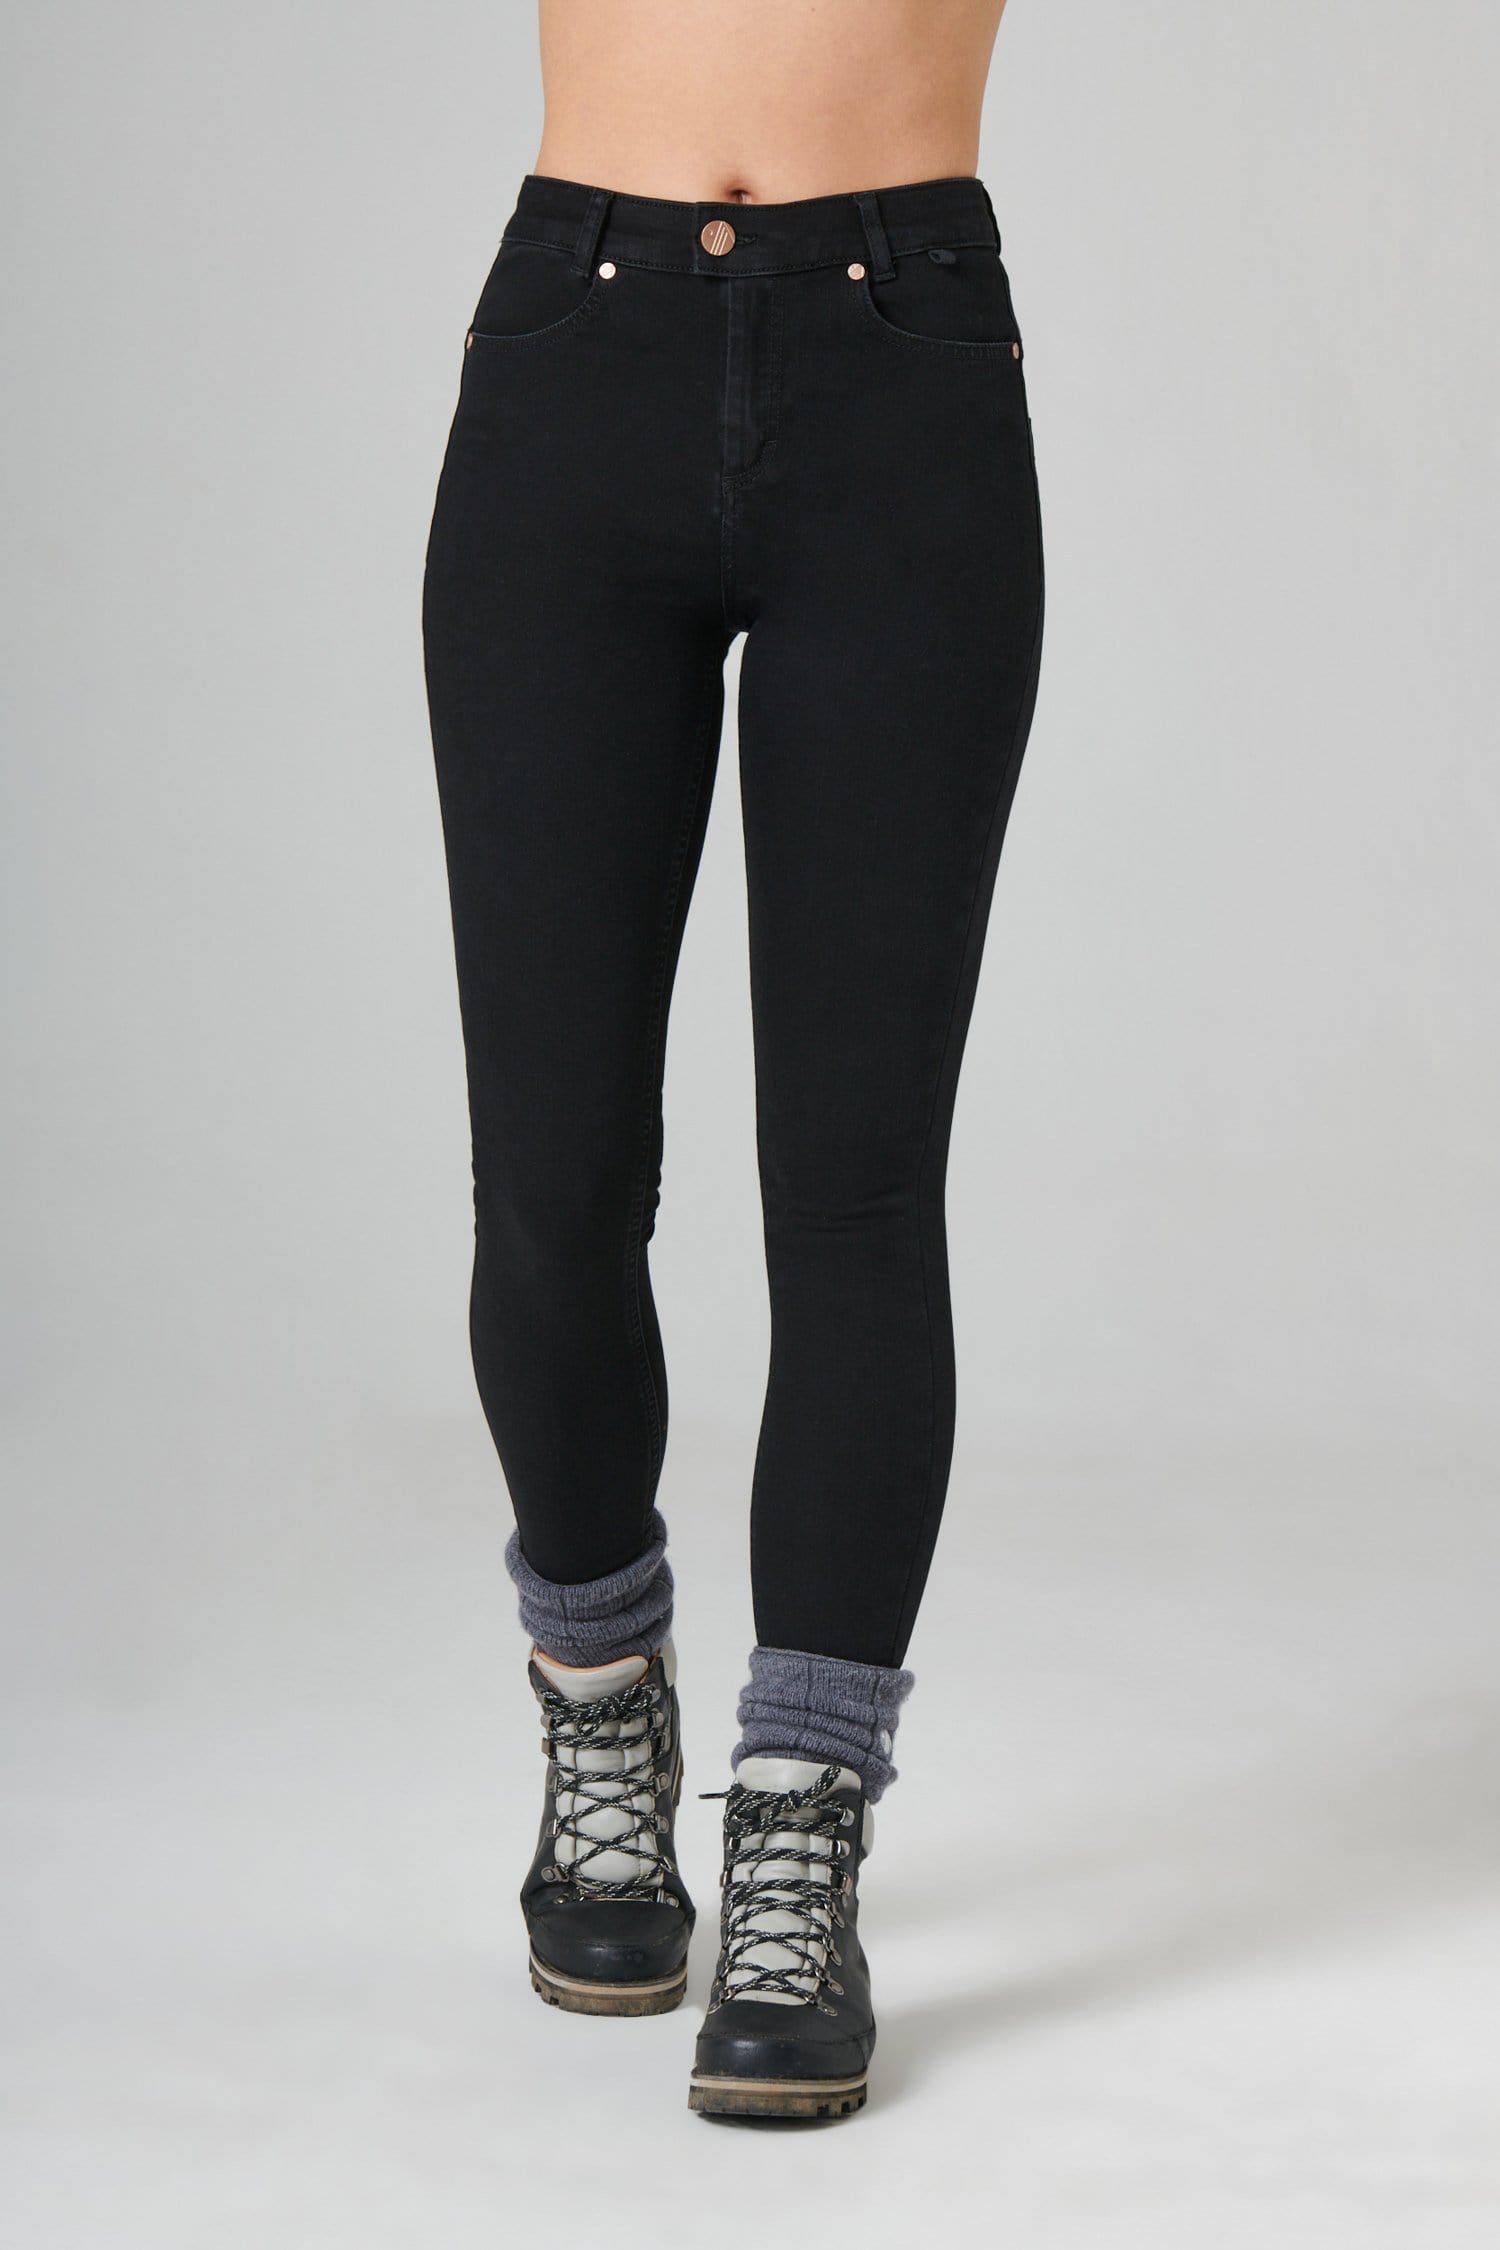 The Skinny Outdoor Jeans - Black Denim - 30p / Uk12 - Womens - Acai Outdoorwear